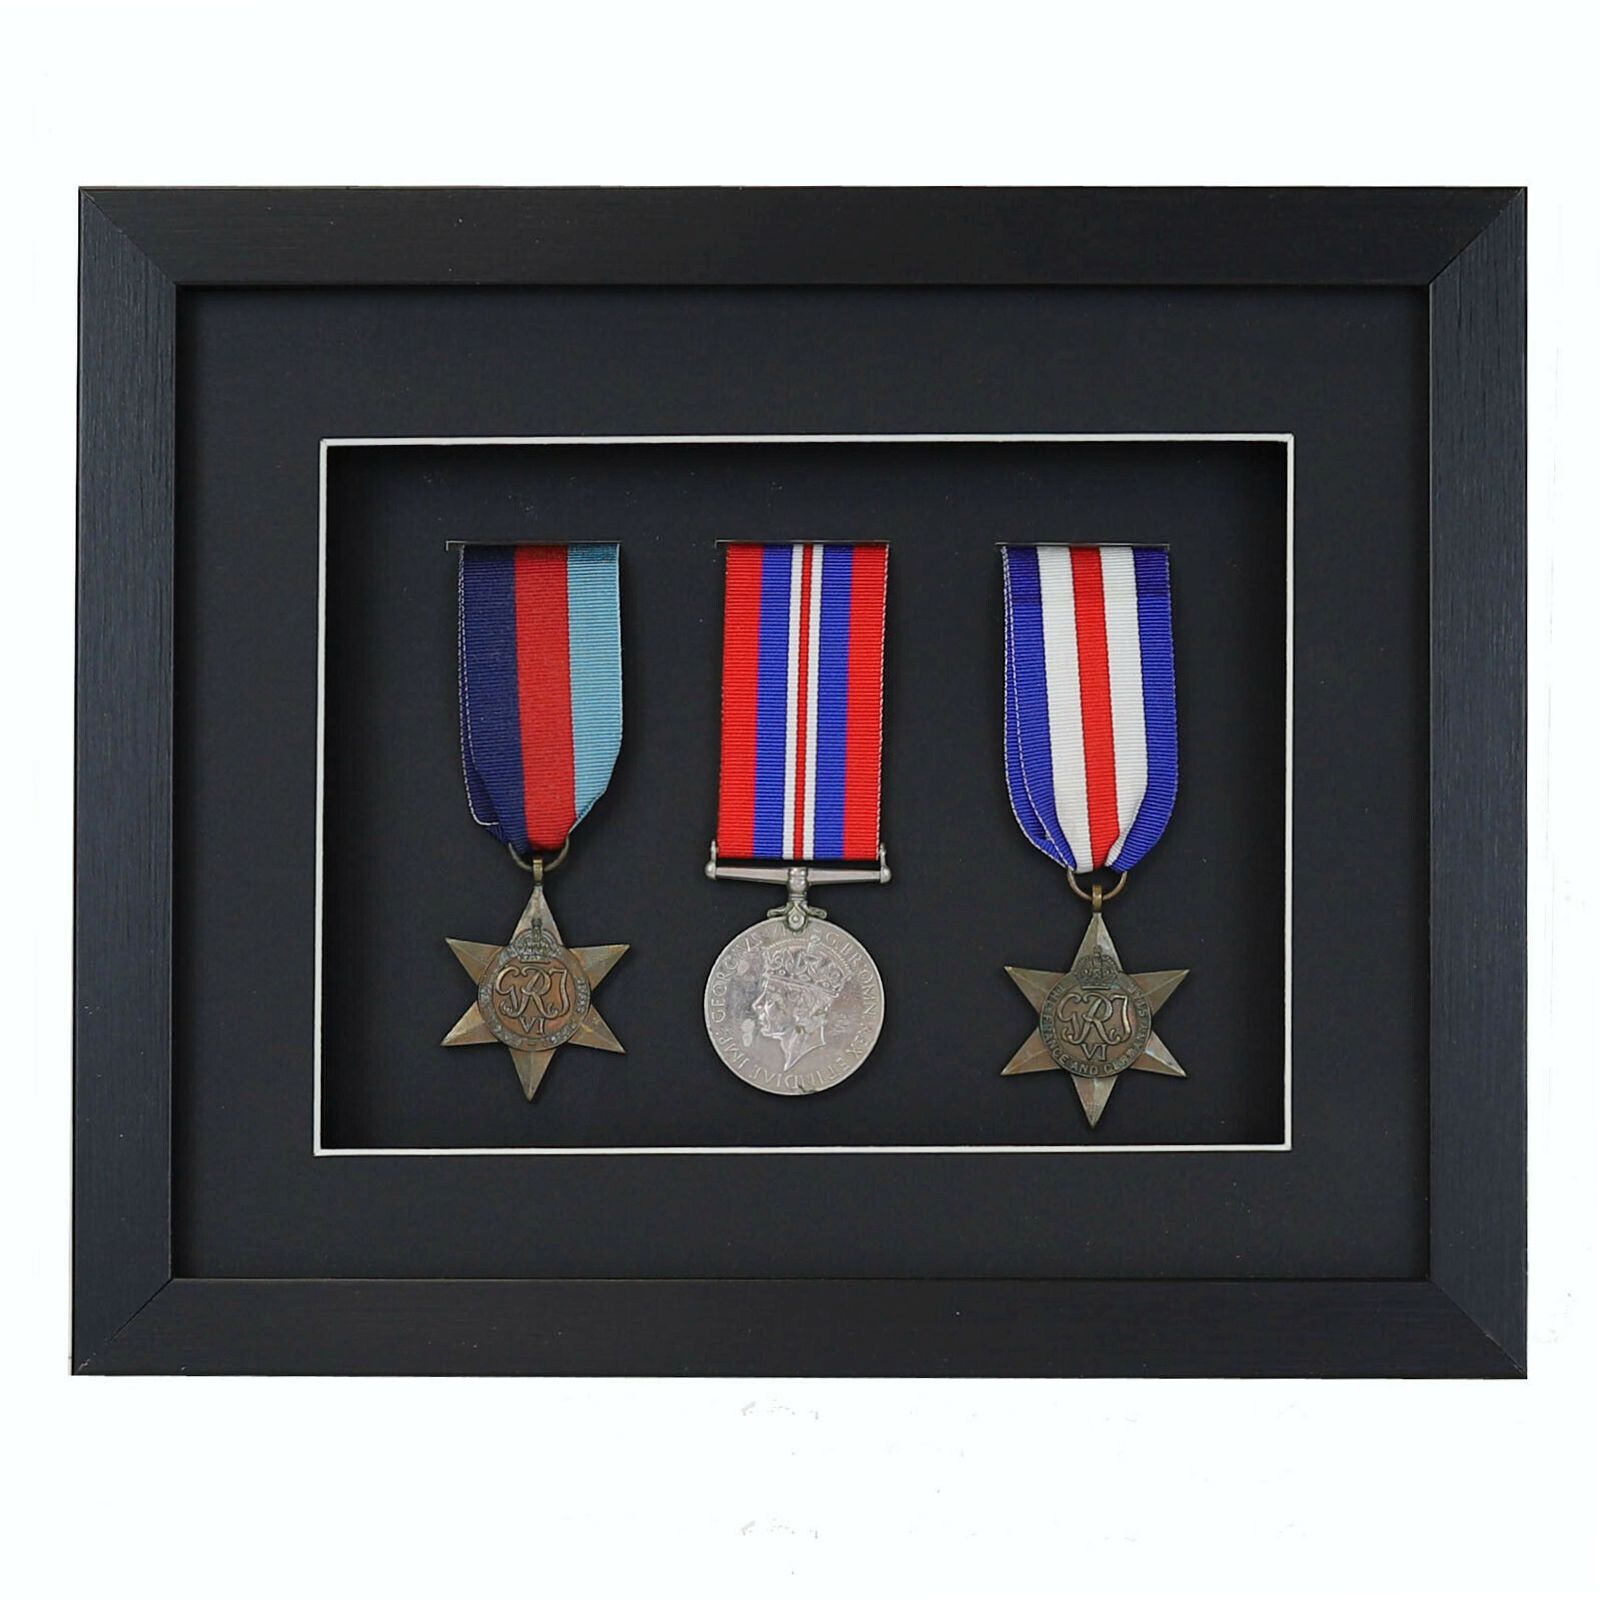 Black Mount Medal Framing 40X World War Military Single or Group Medals